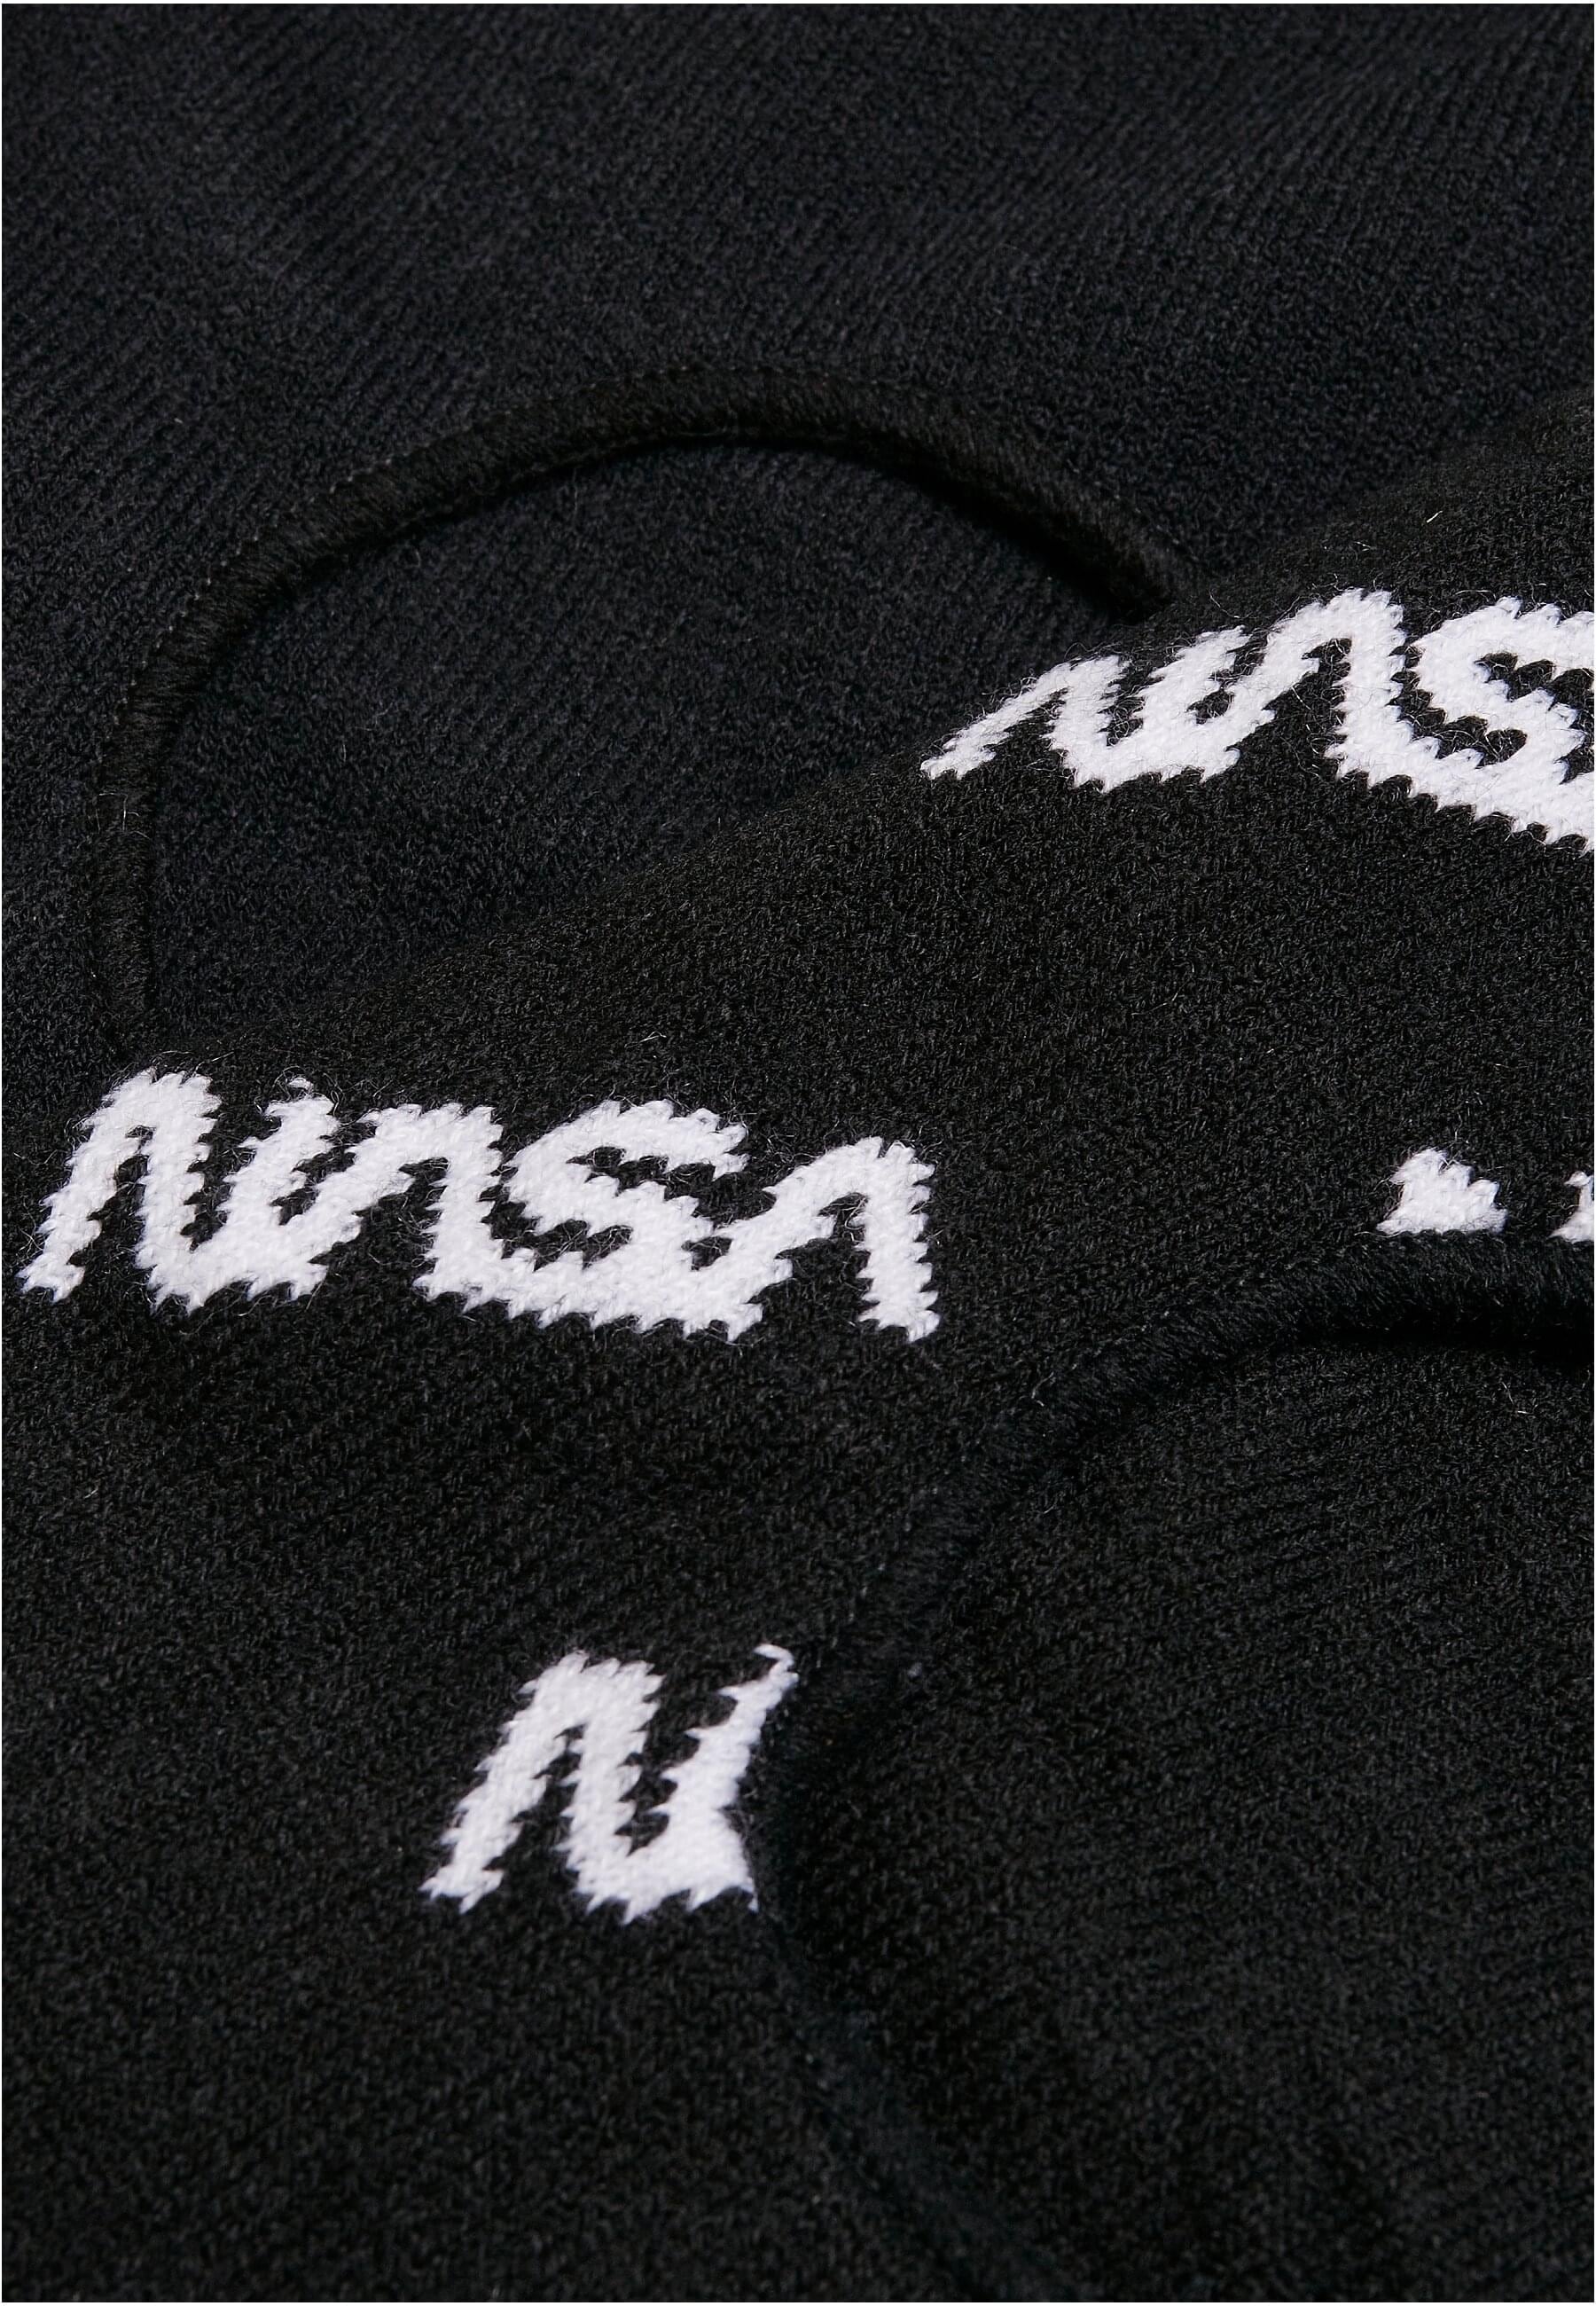 MisterTee Mund-Nasen-Maske »MisterTee Unisex NASA Storm Mask Set«